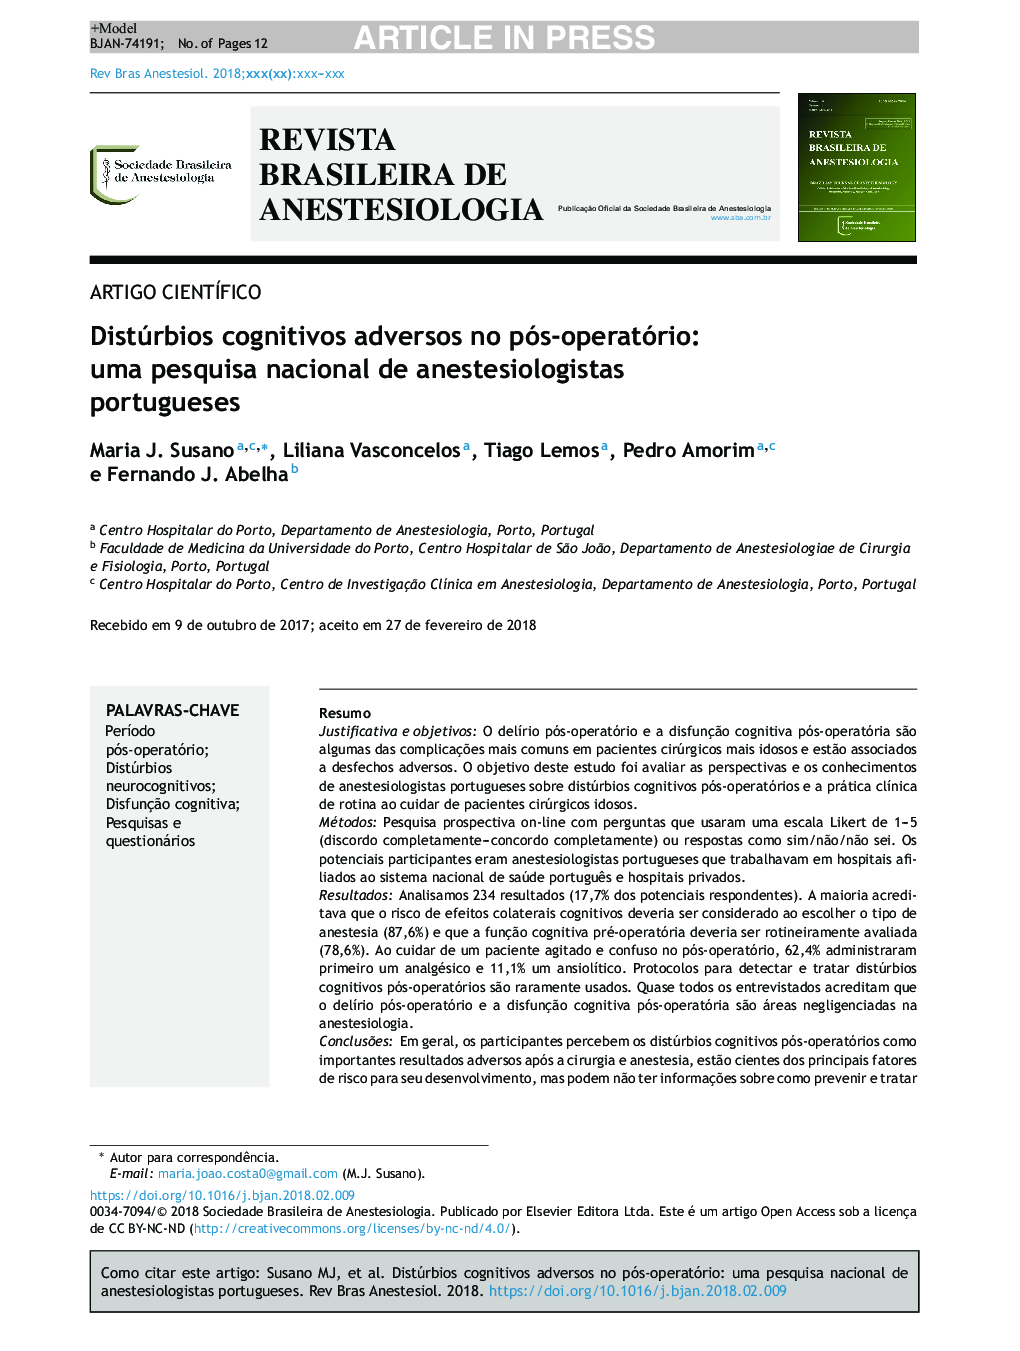 Distúrbios cognitivos adversos no pósâoperatório: uma pesquisa nacional de anestesiologistas portugueses